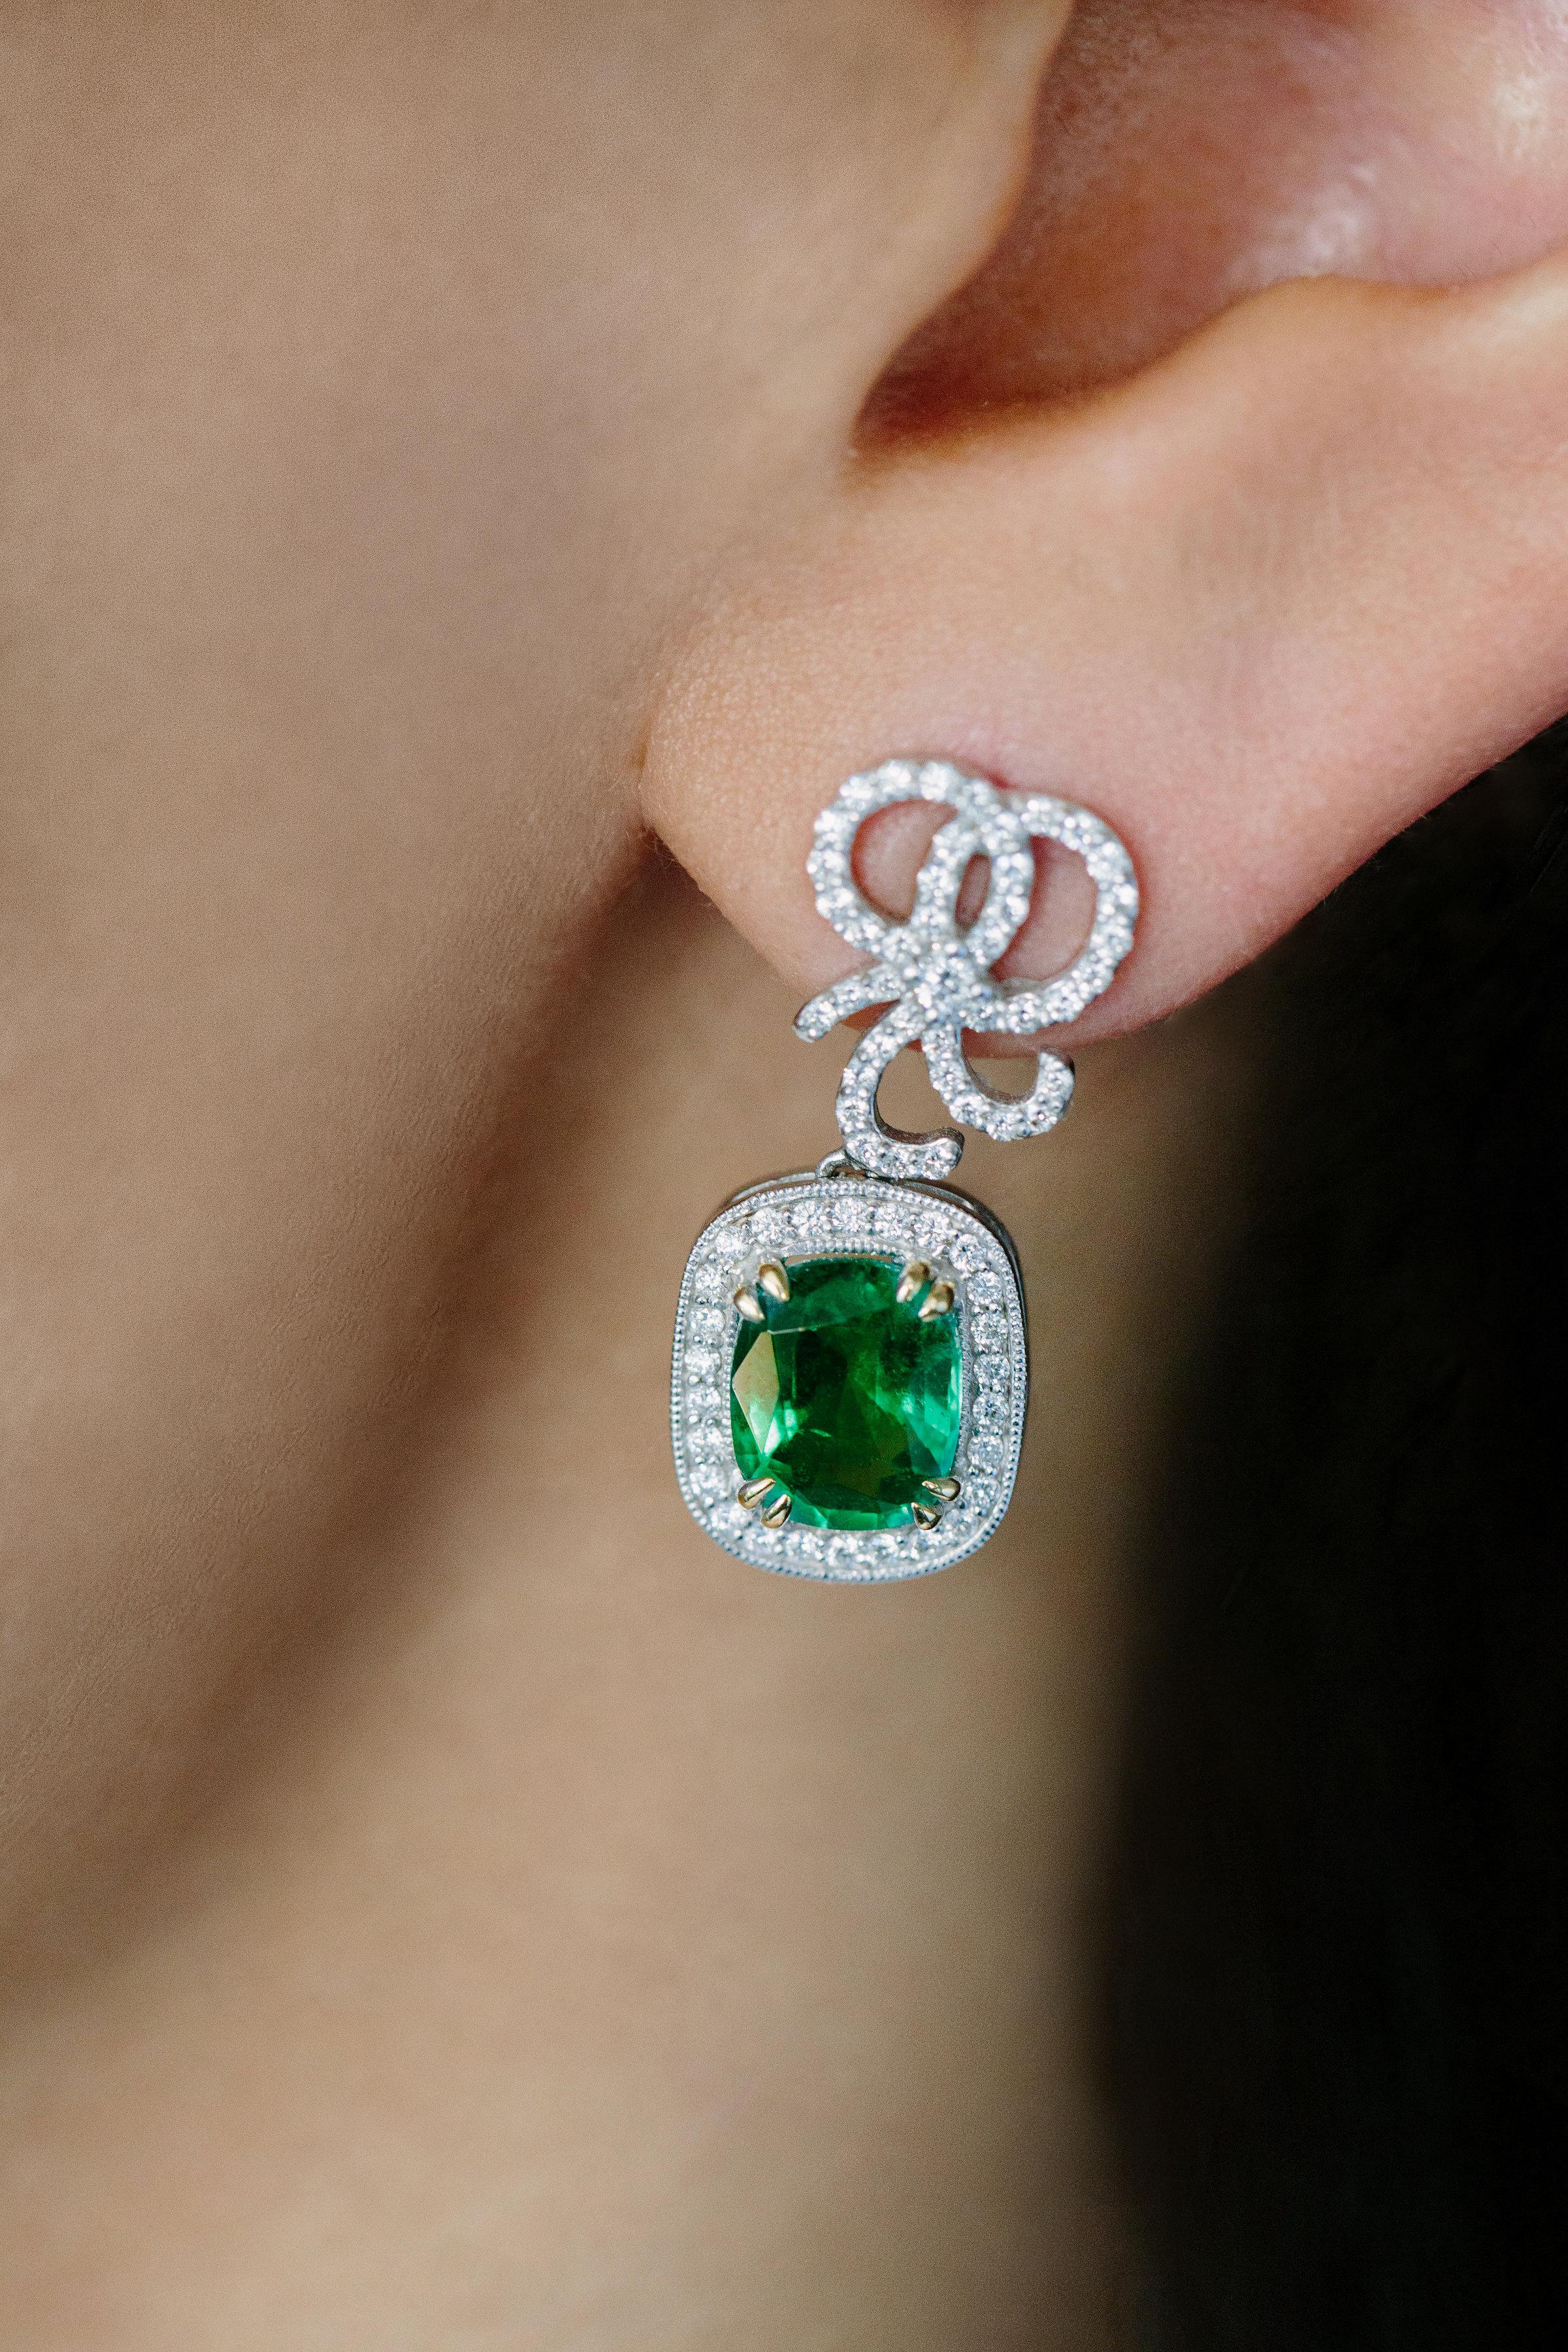 Cushion Cut Emerald & Diamond Bow Earrings.

- 18K White Gold
- Cushion Cut Emeralds 3.03 carat total weight 
- Round Brilliant Diamonds 0.62 carat total weight 
- Ideal Cut
- F/G in Color
- VS in Clarity